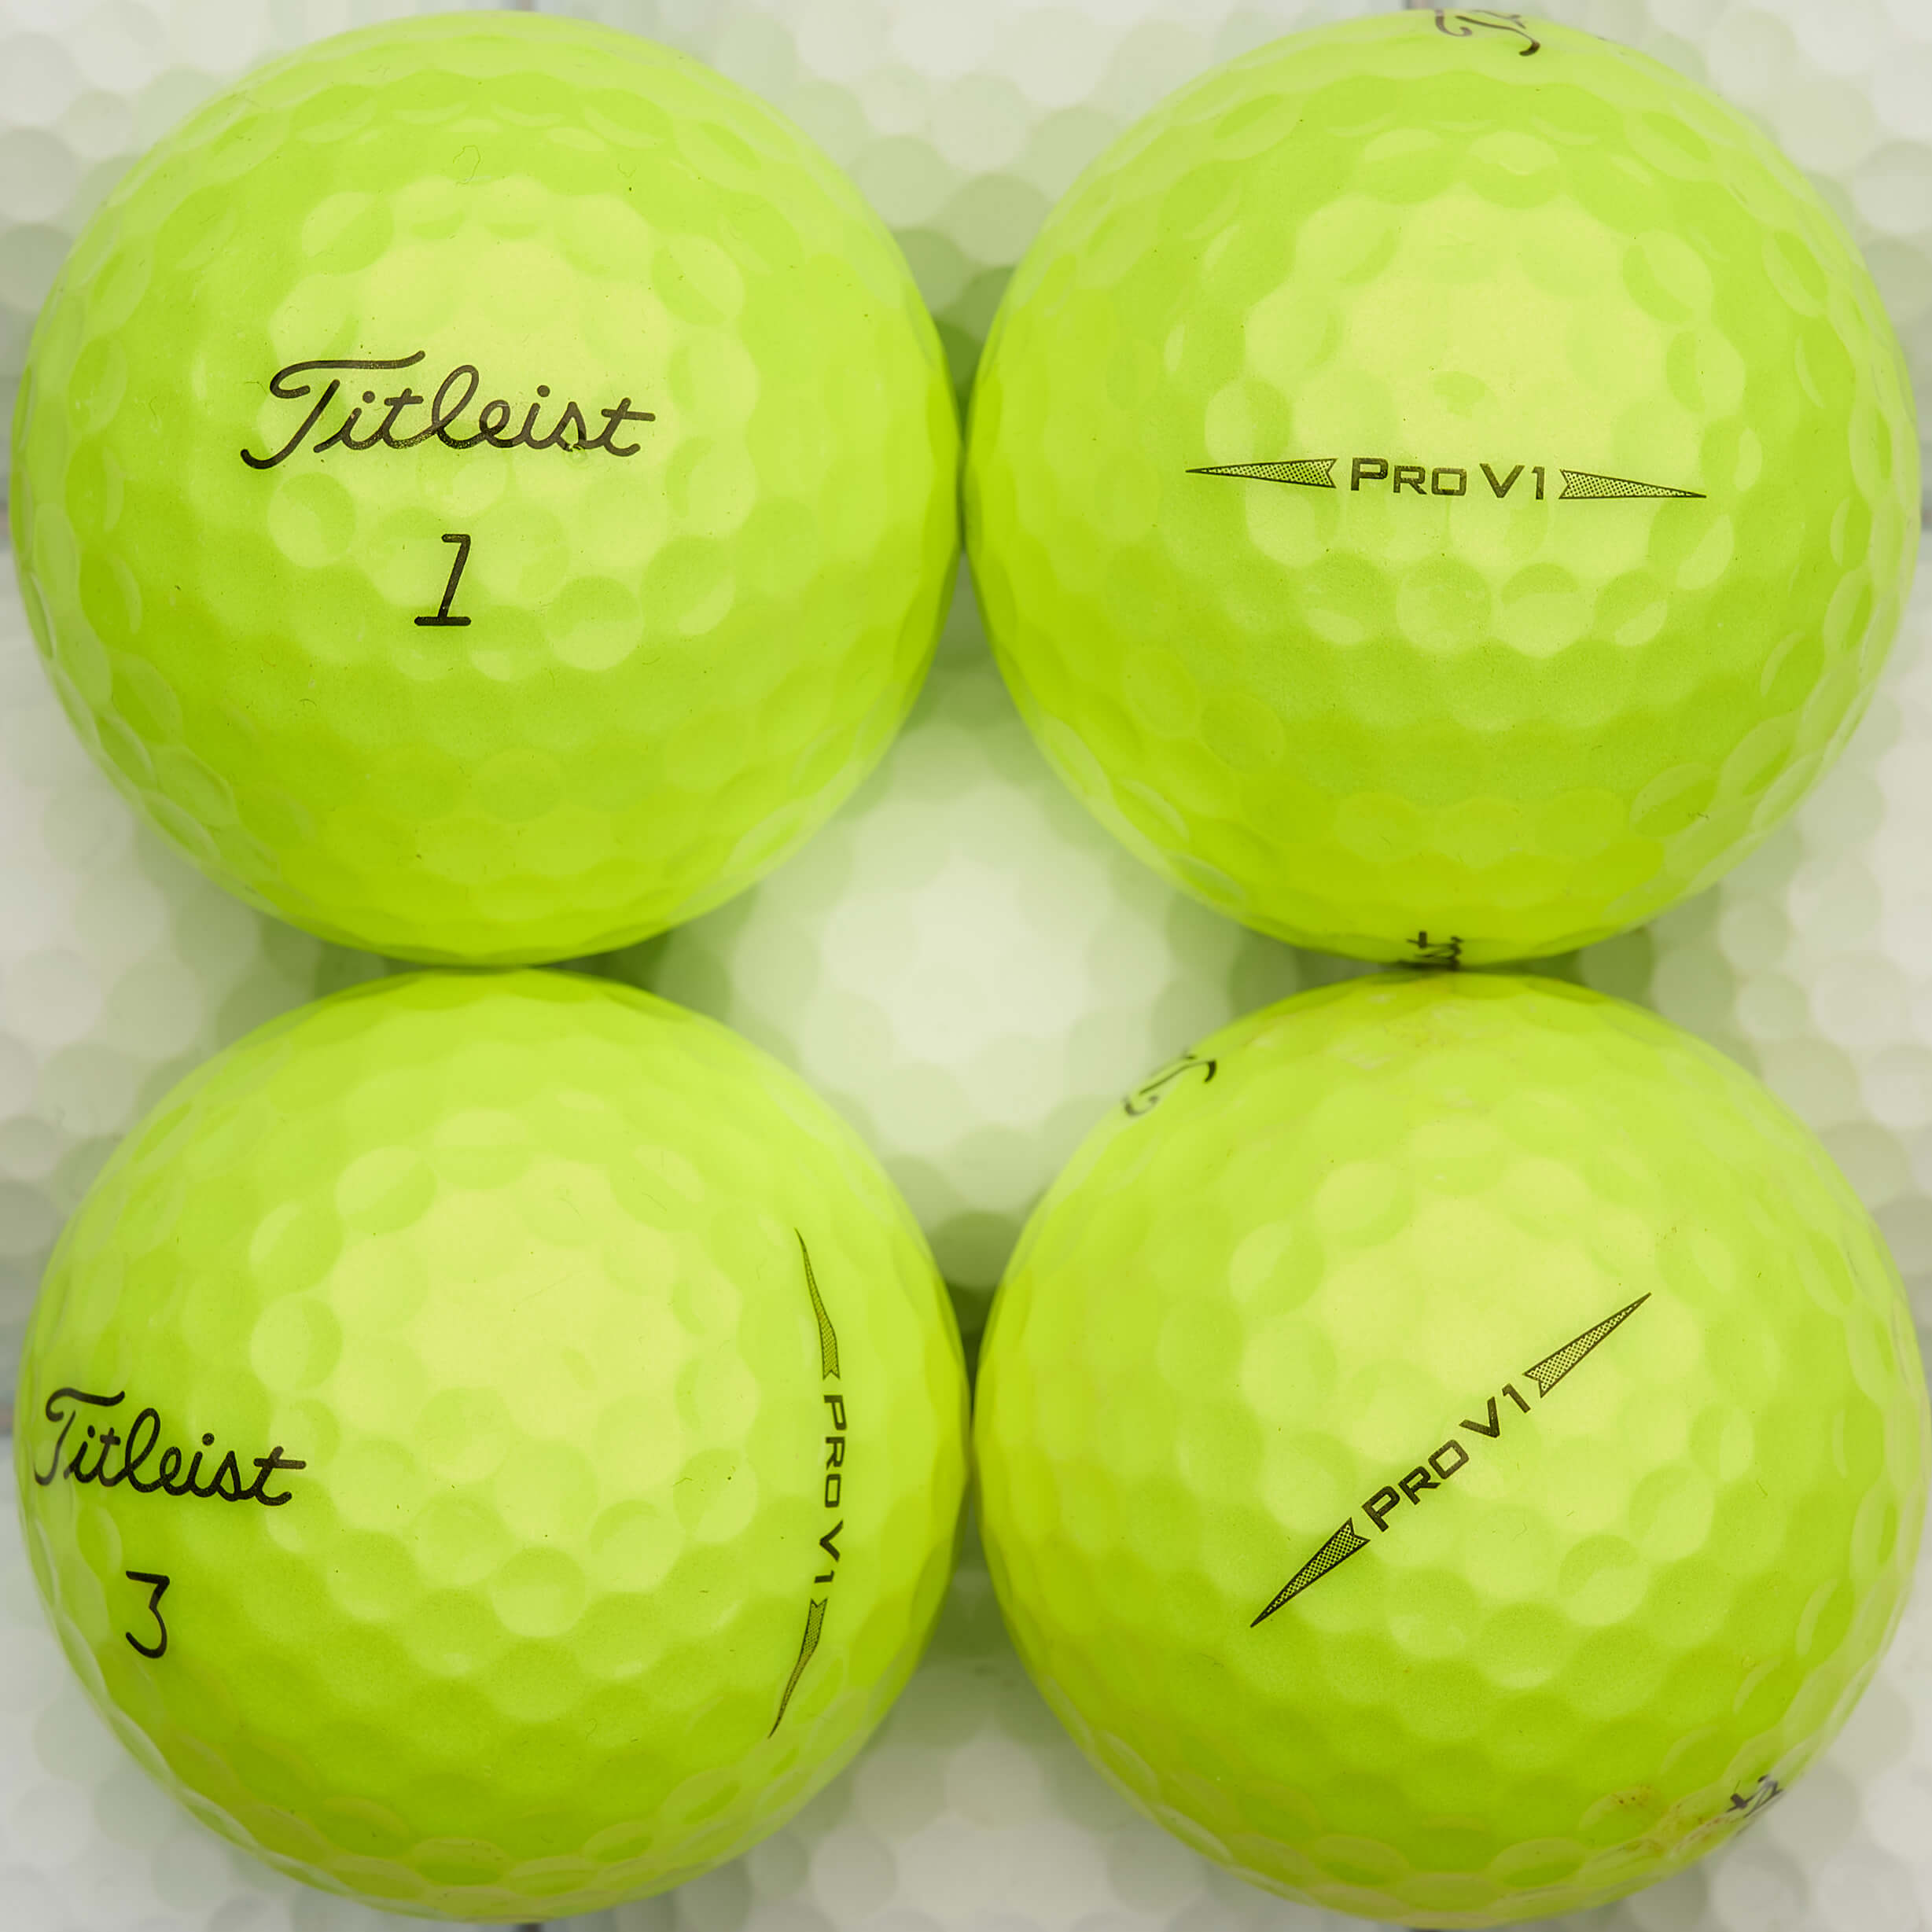 25 Titleist Pro V1 Lakeballs, yellow